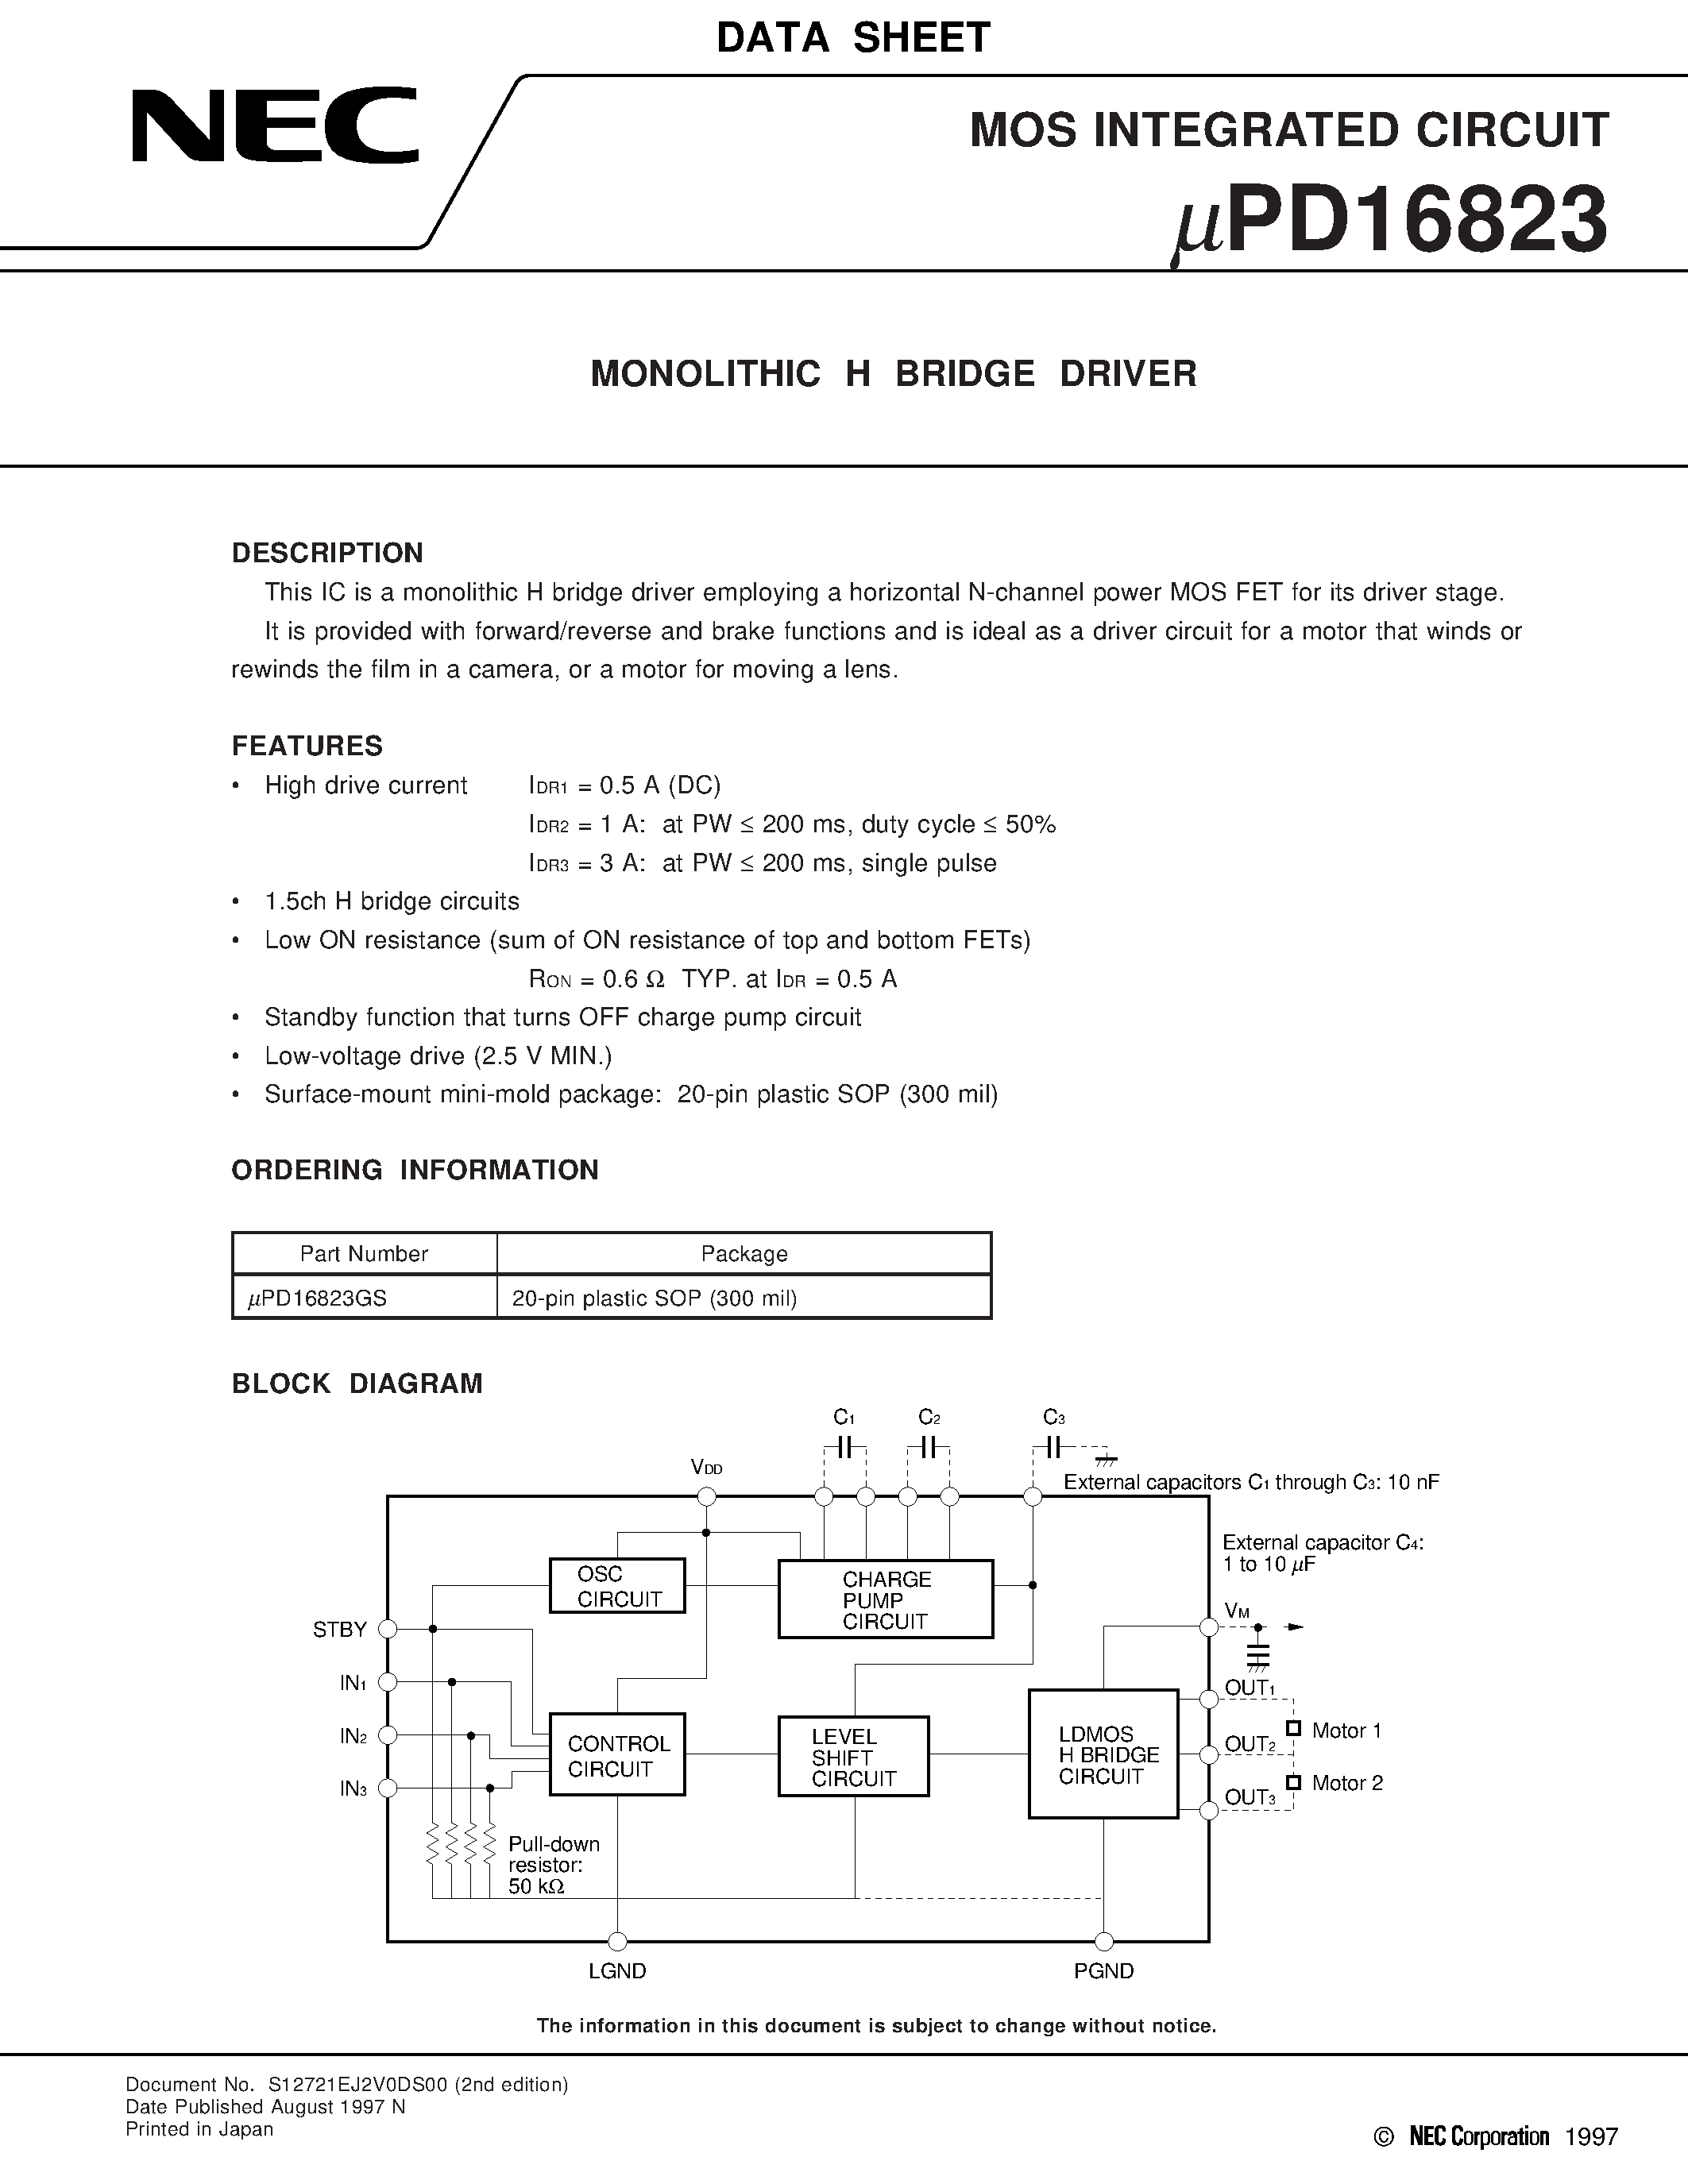 Datasheet UPD16823GS - MONOLITHIC H BRIDGE DRIVER page 1